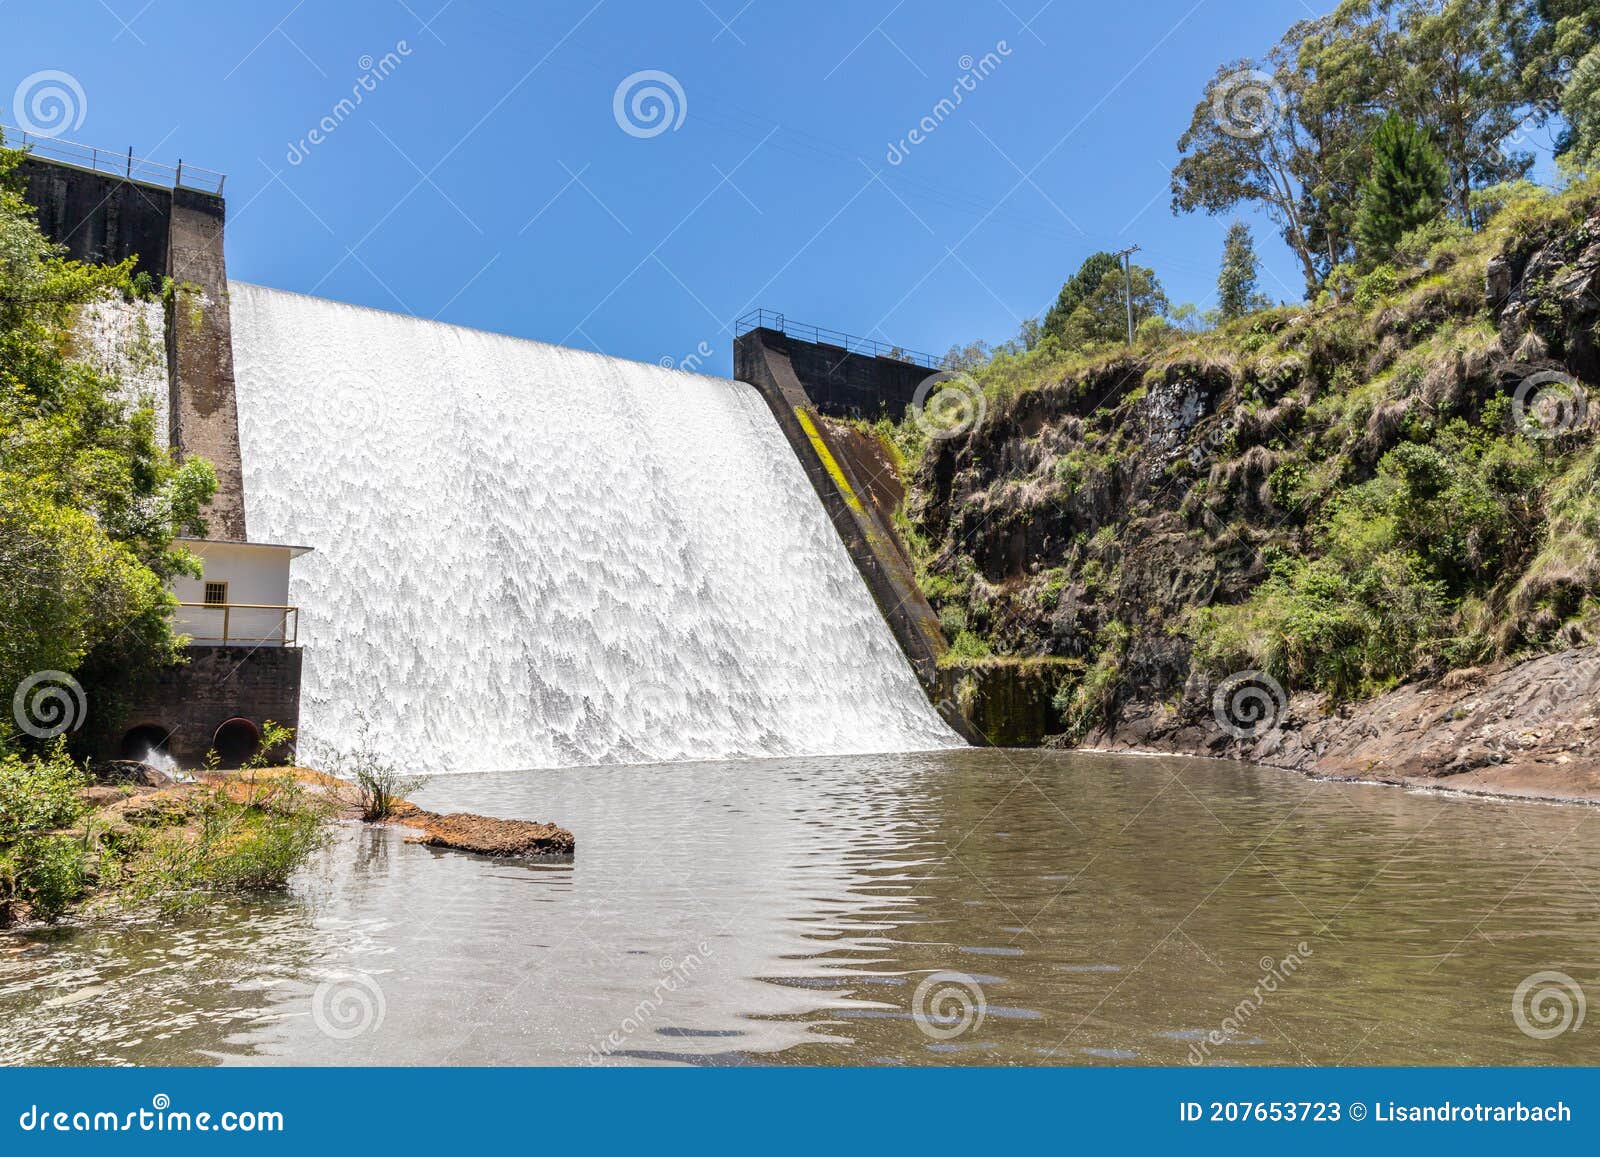 waterfall and building in divisa dam